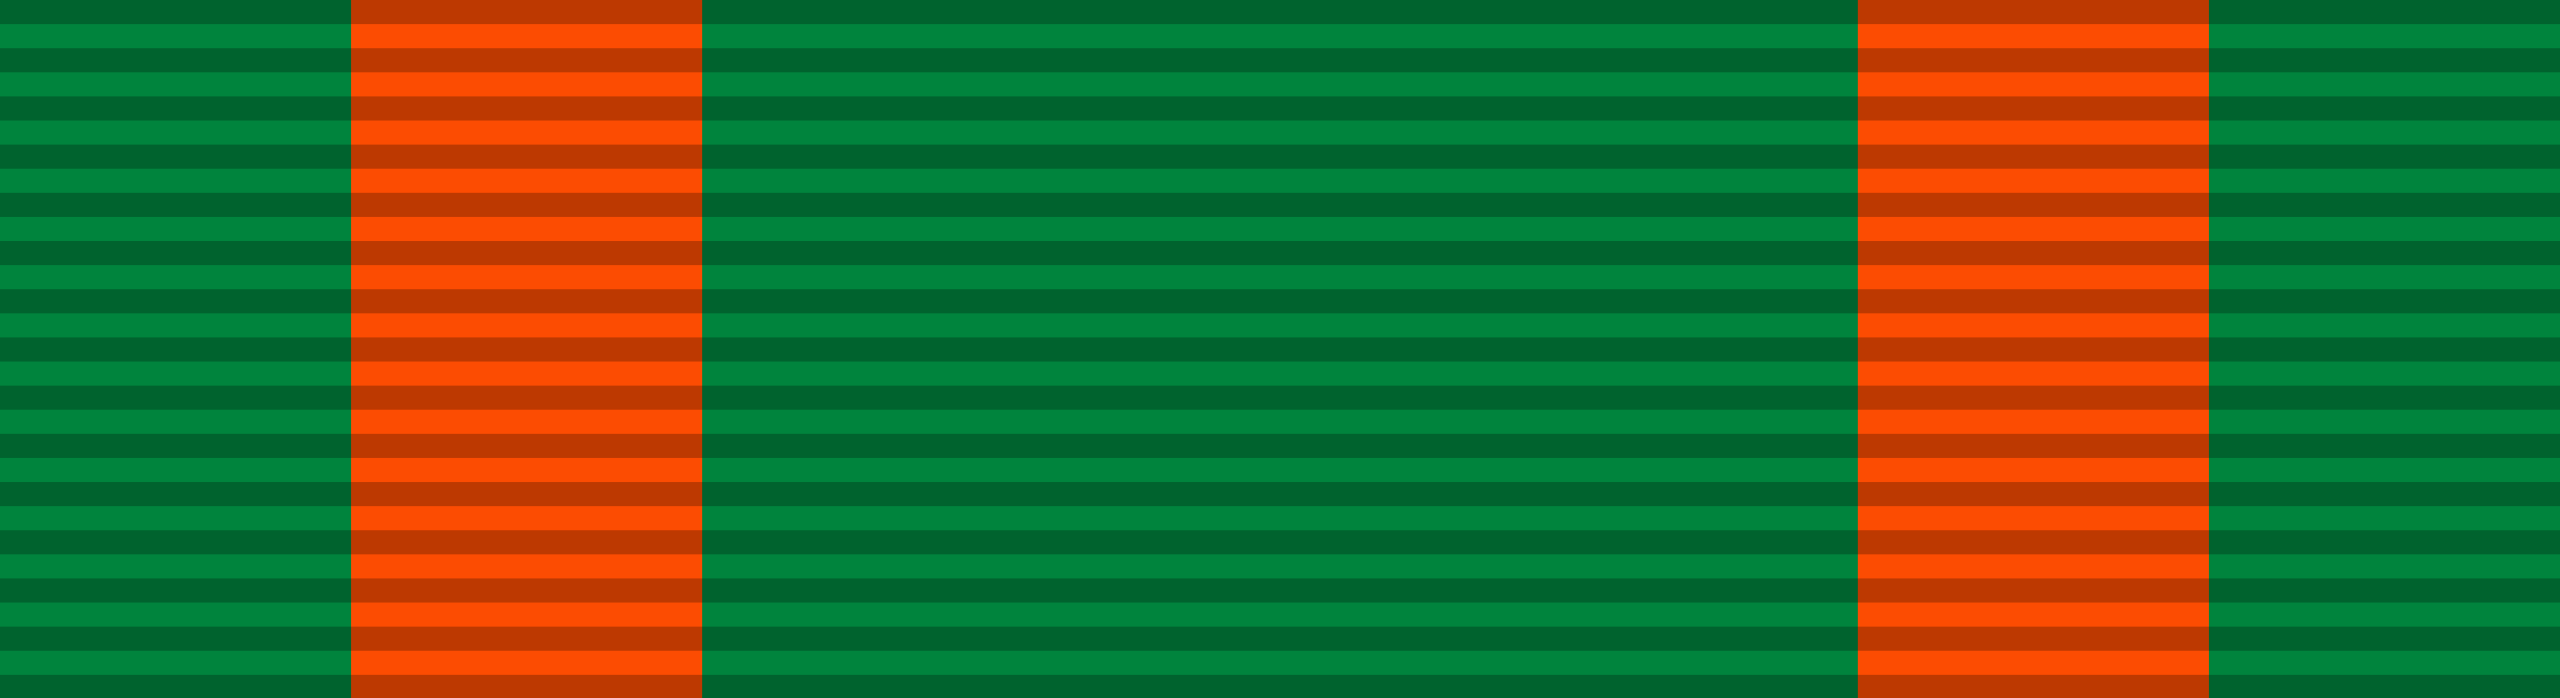 Navy Achievement Medal